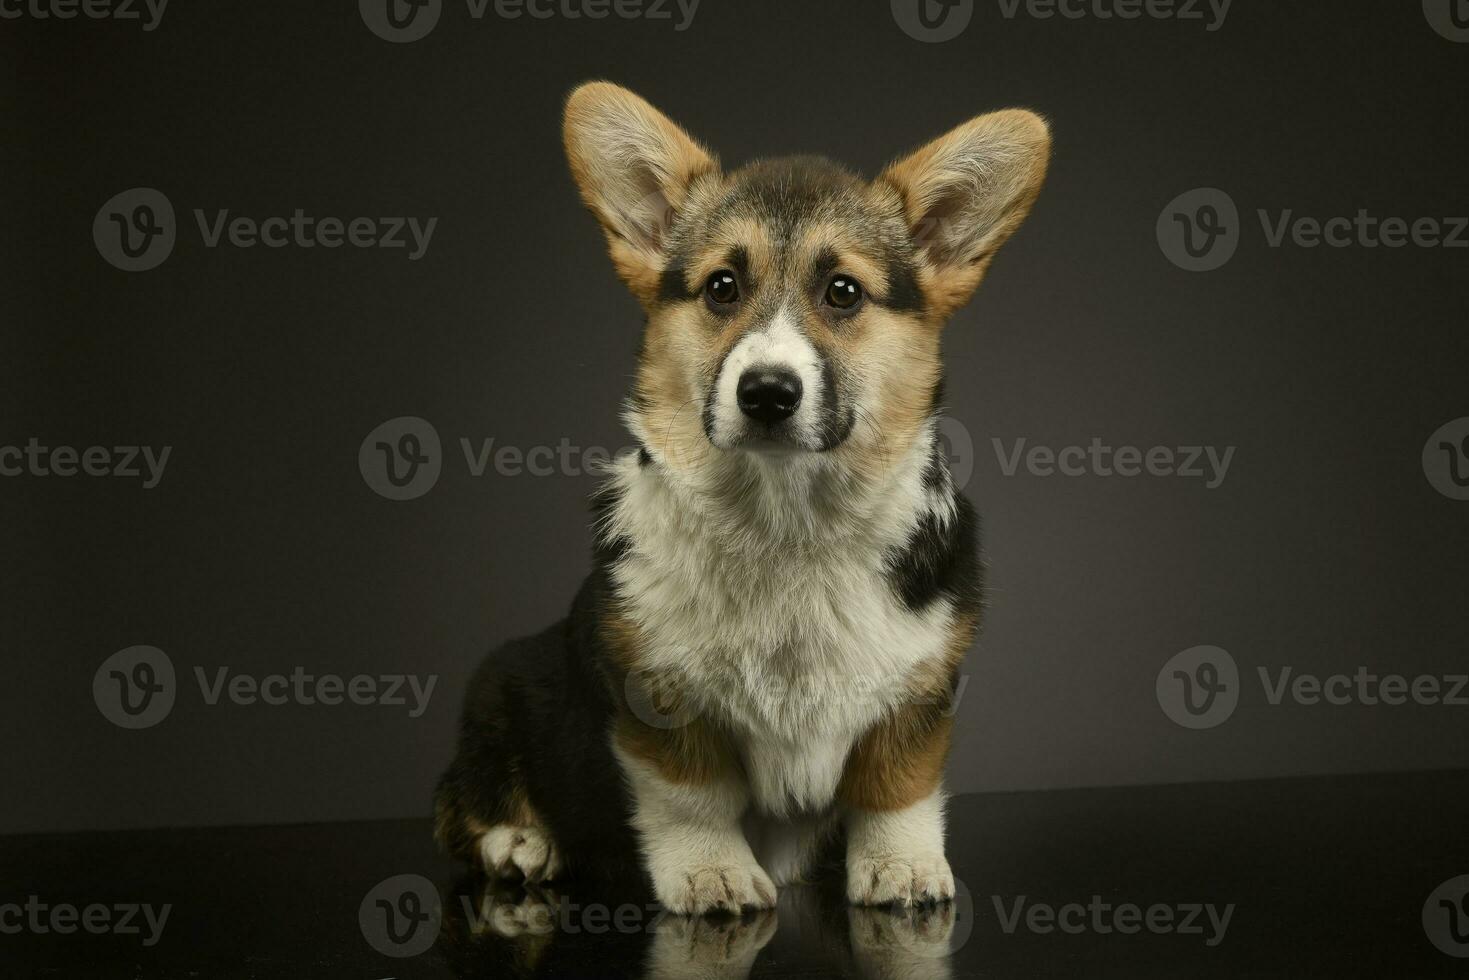 bellissimo cucciolo corgie seduta nel un' buio foto studio